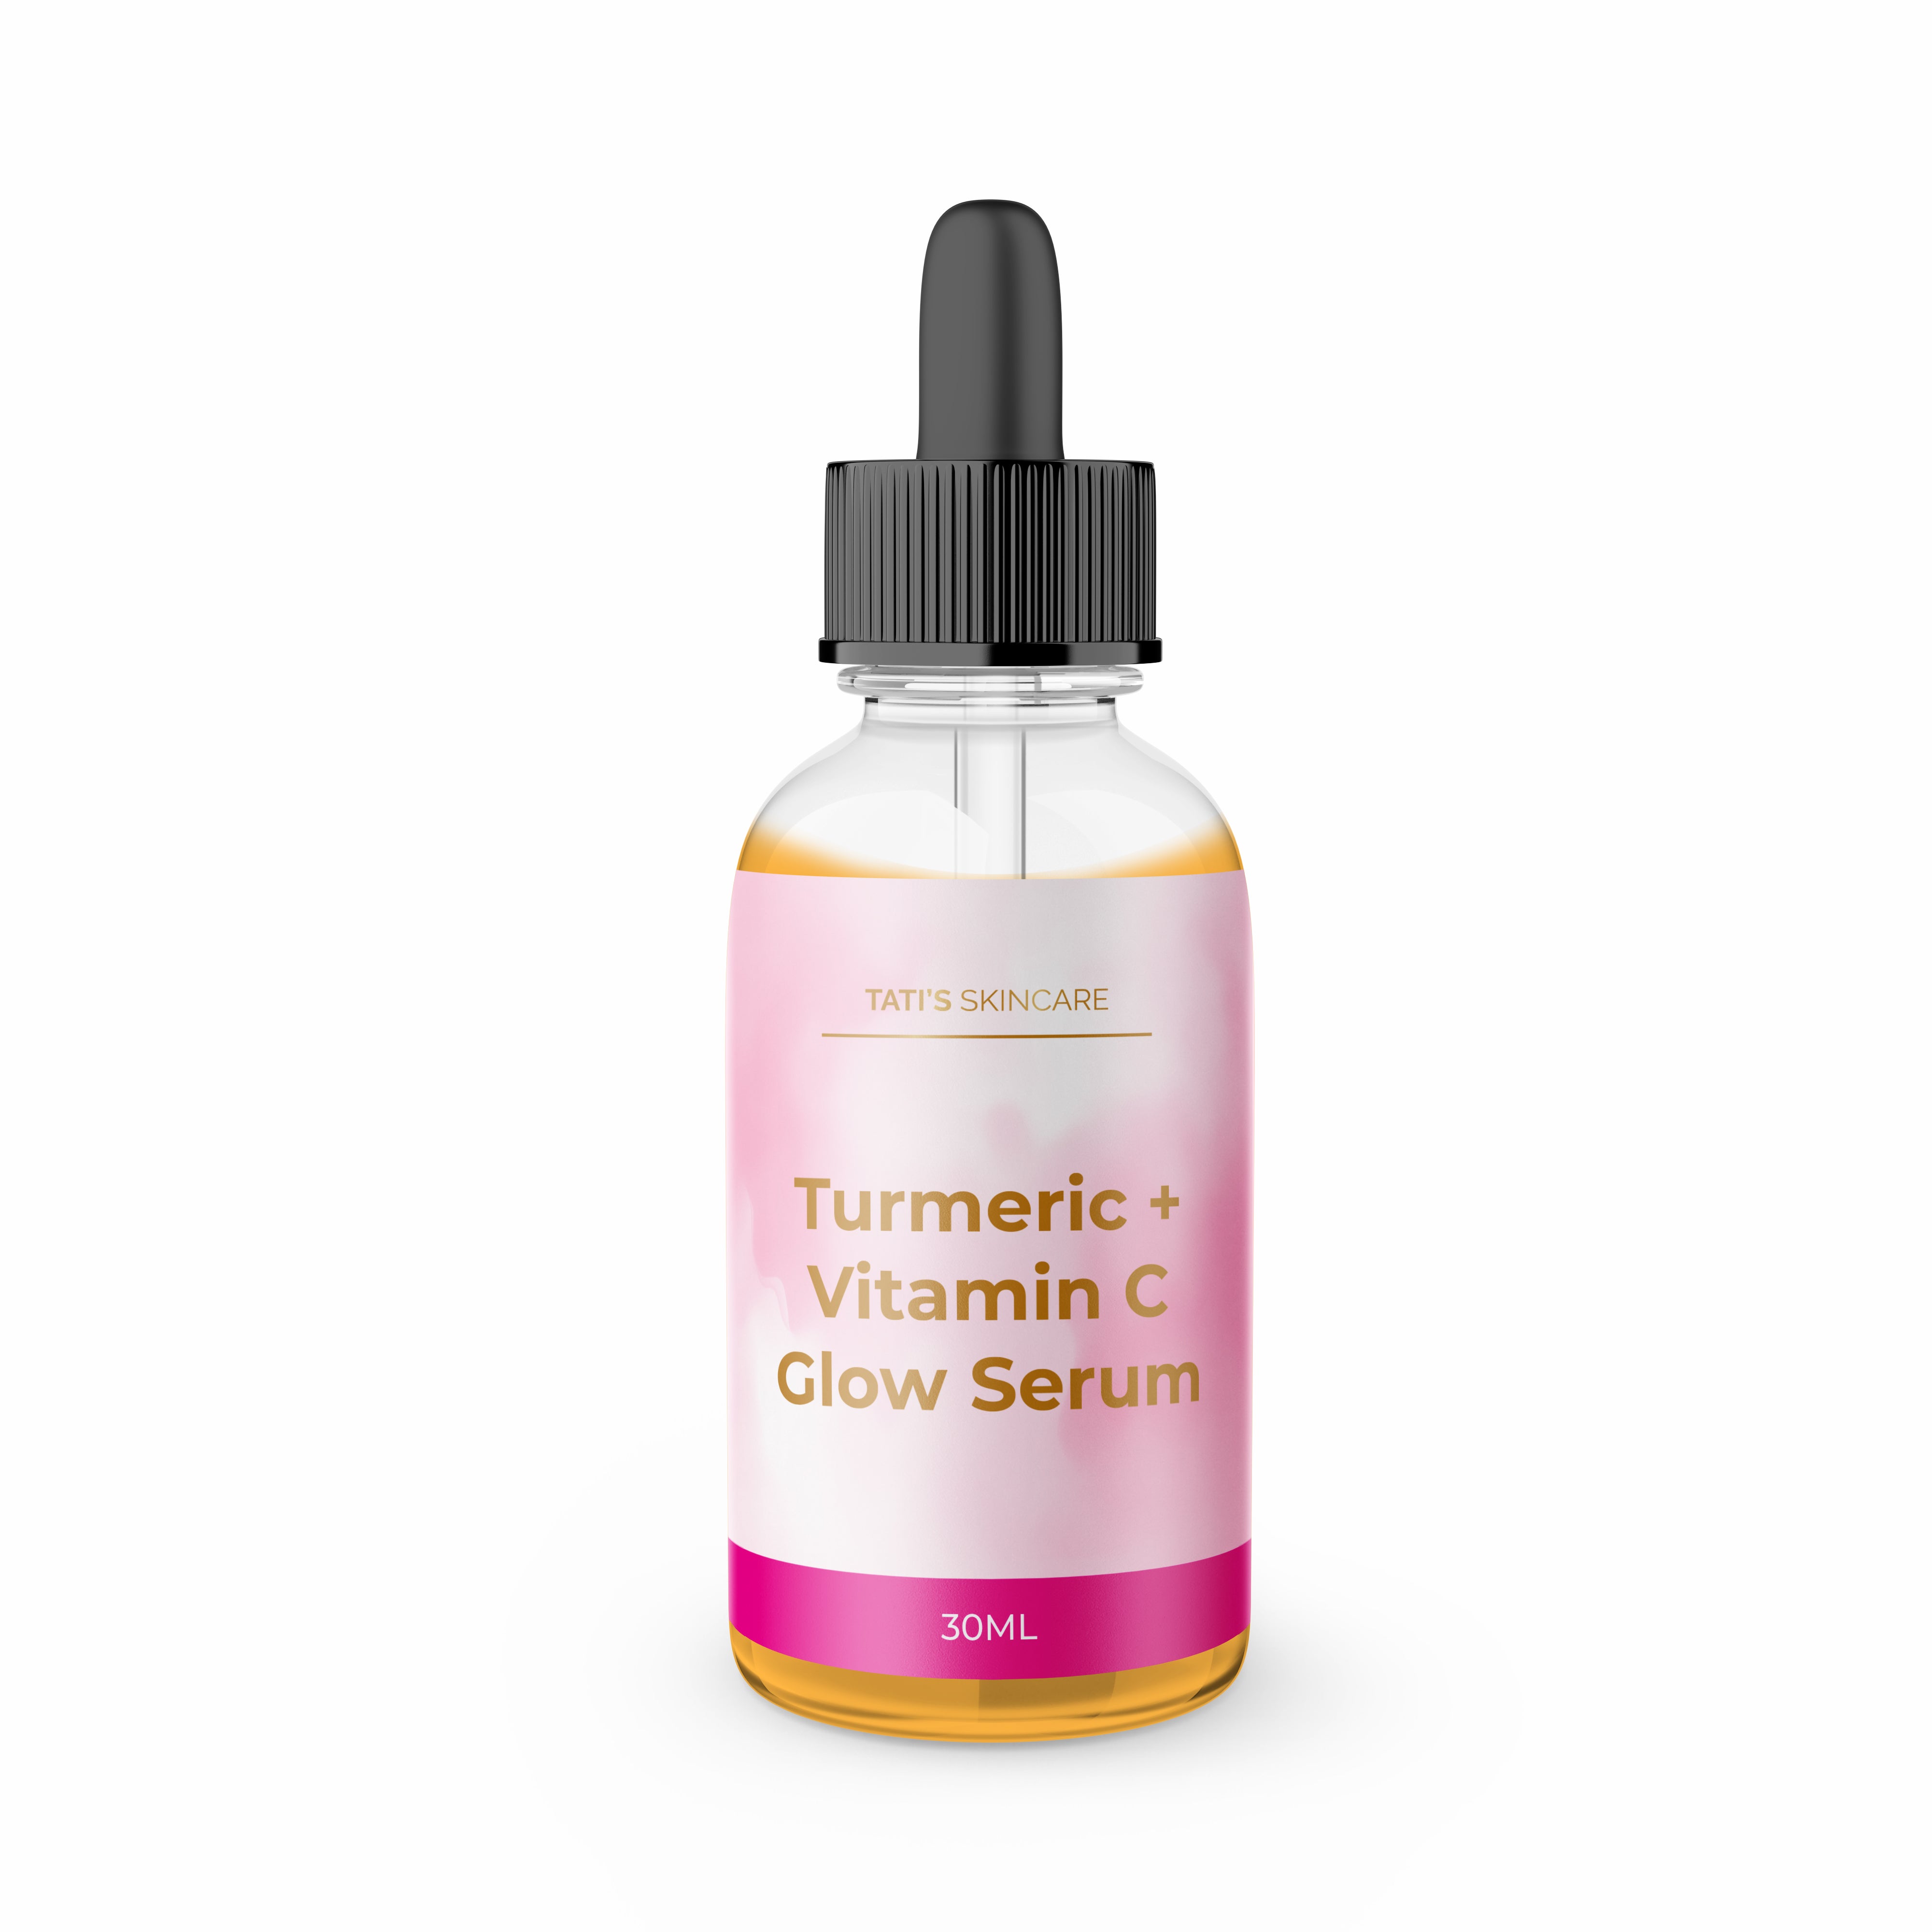 Turmeric + Vitamin C Glow Serum